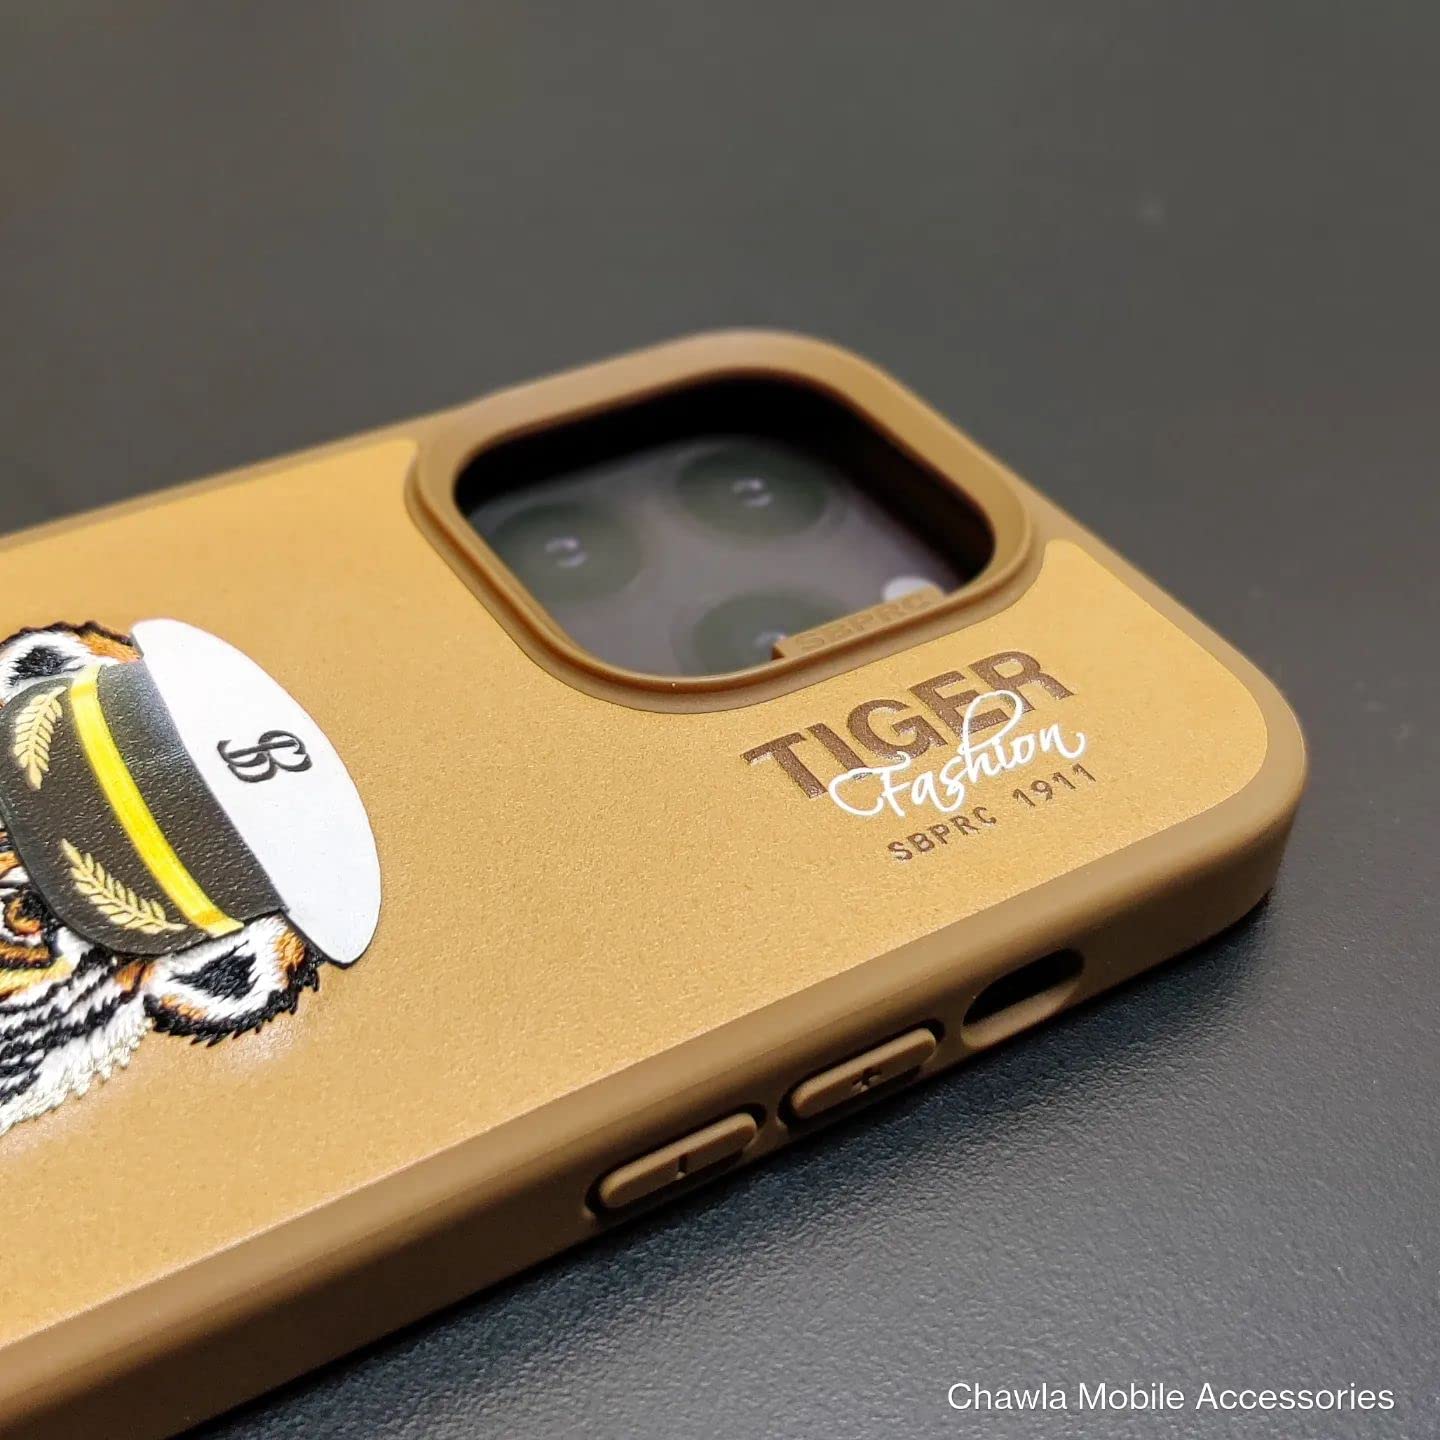 iPhone 14 Pro Santa Barbara Polo Club Fashion Tiger Leather Case